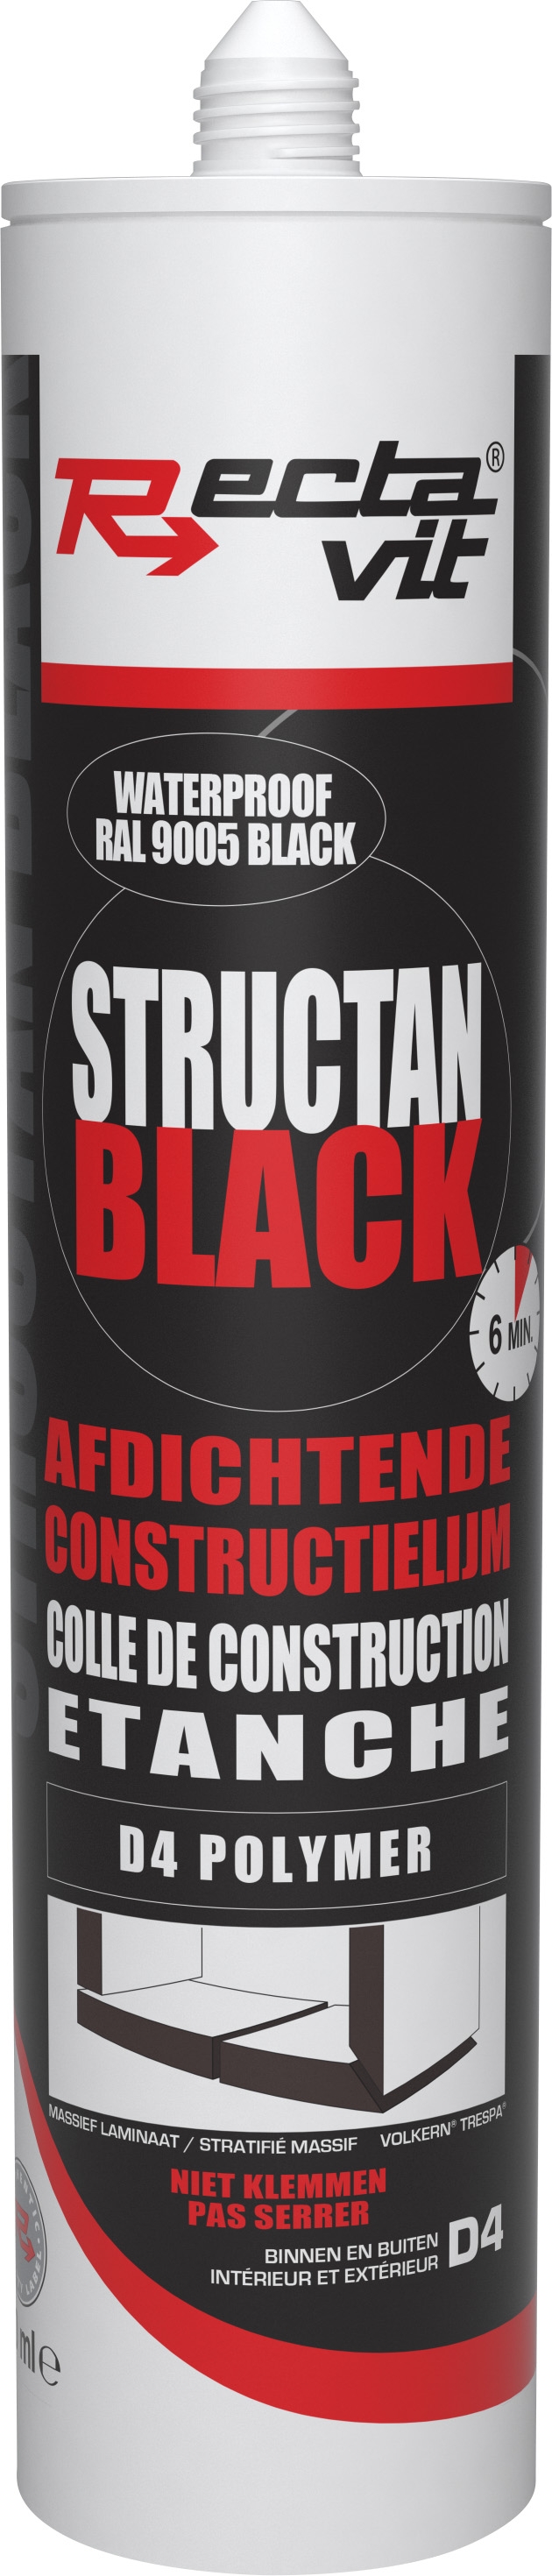 Rectavit Structan Black 290ml